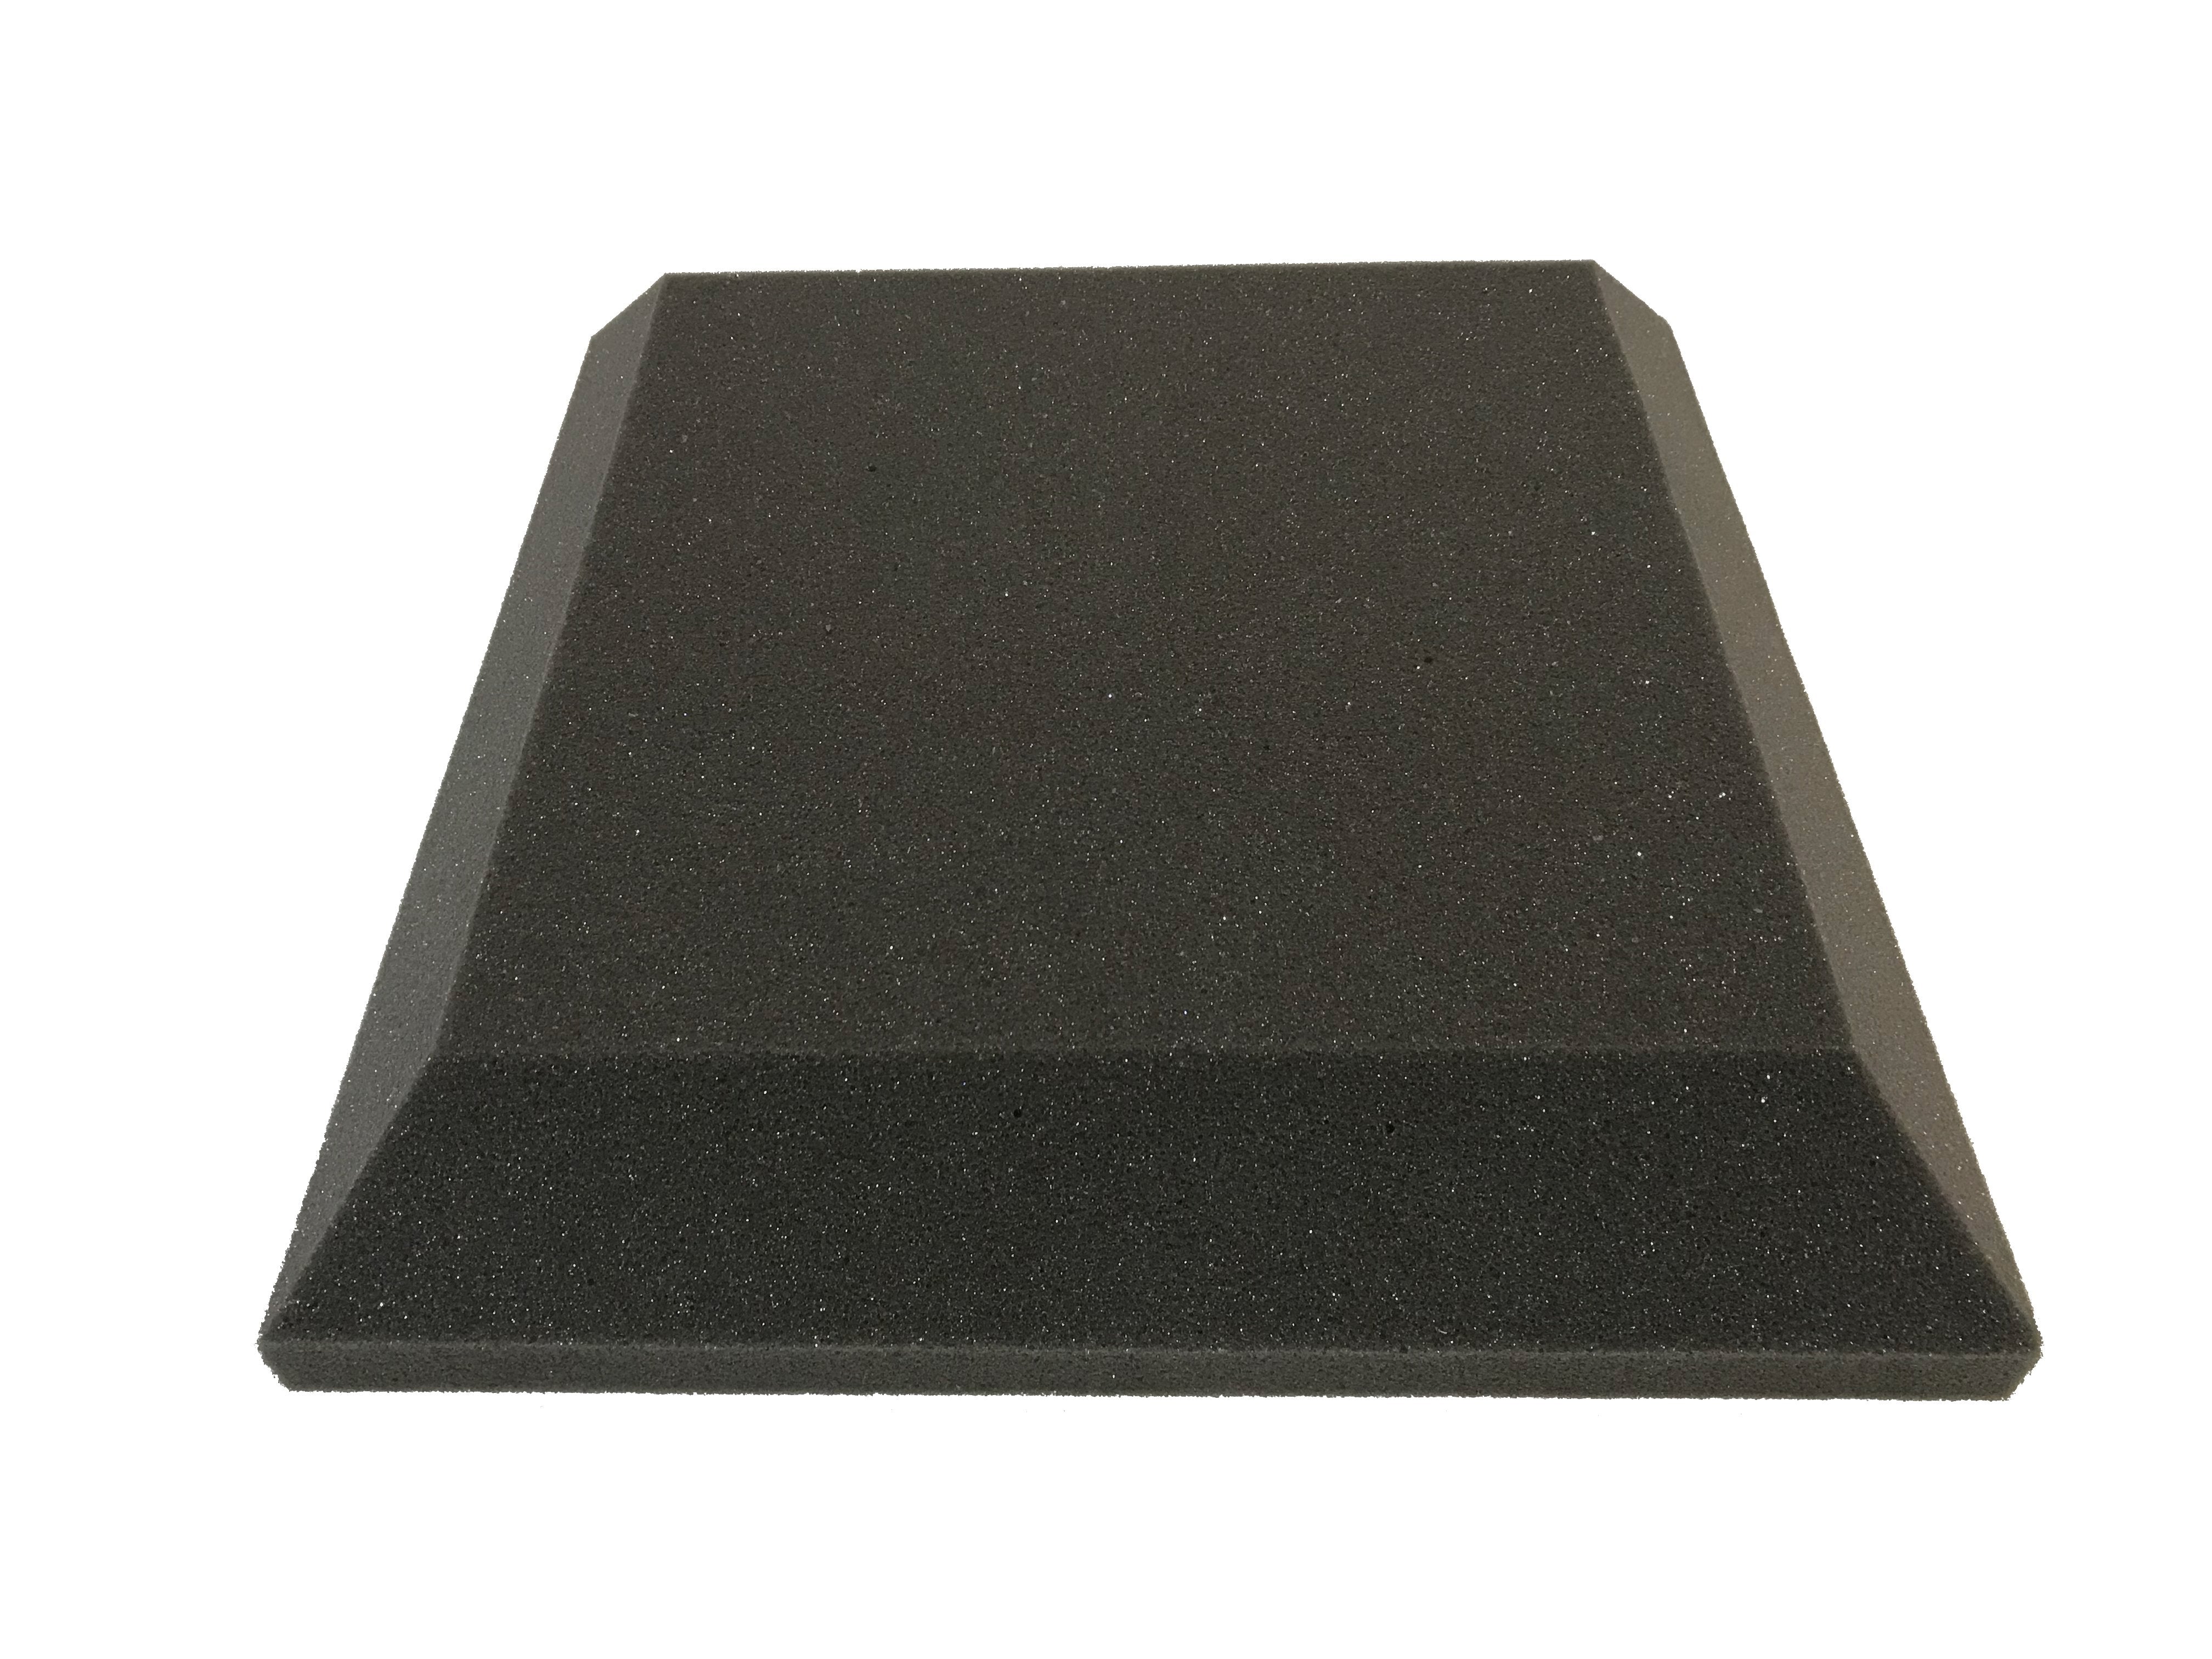 Tegular 12" Acoustic Studio Foam Tile Pack - Advanced Acoustics